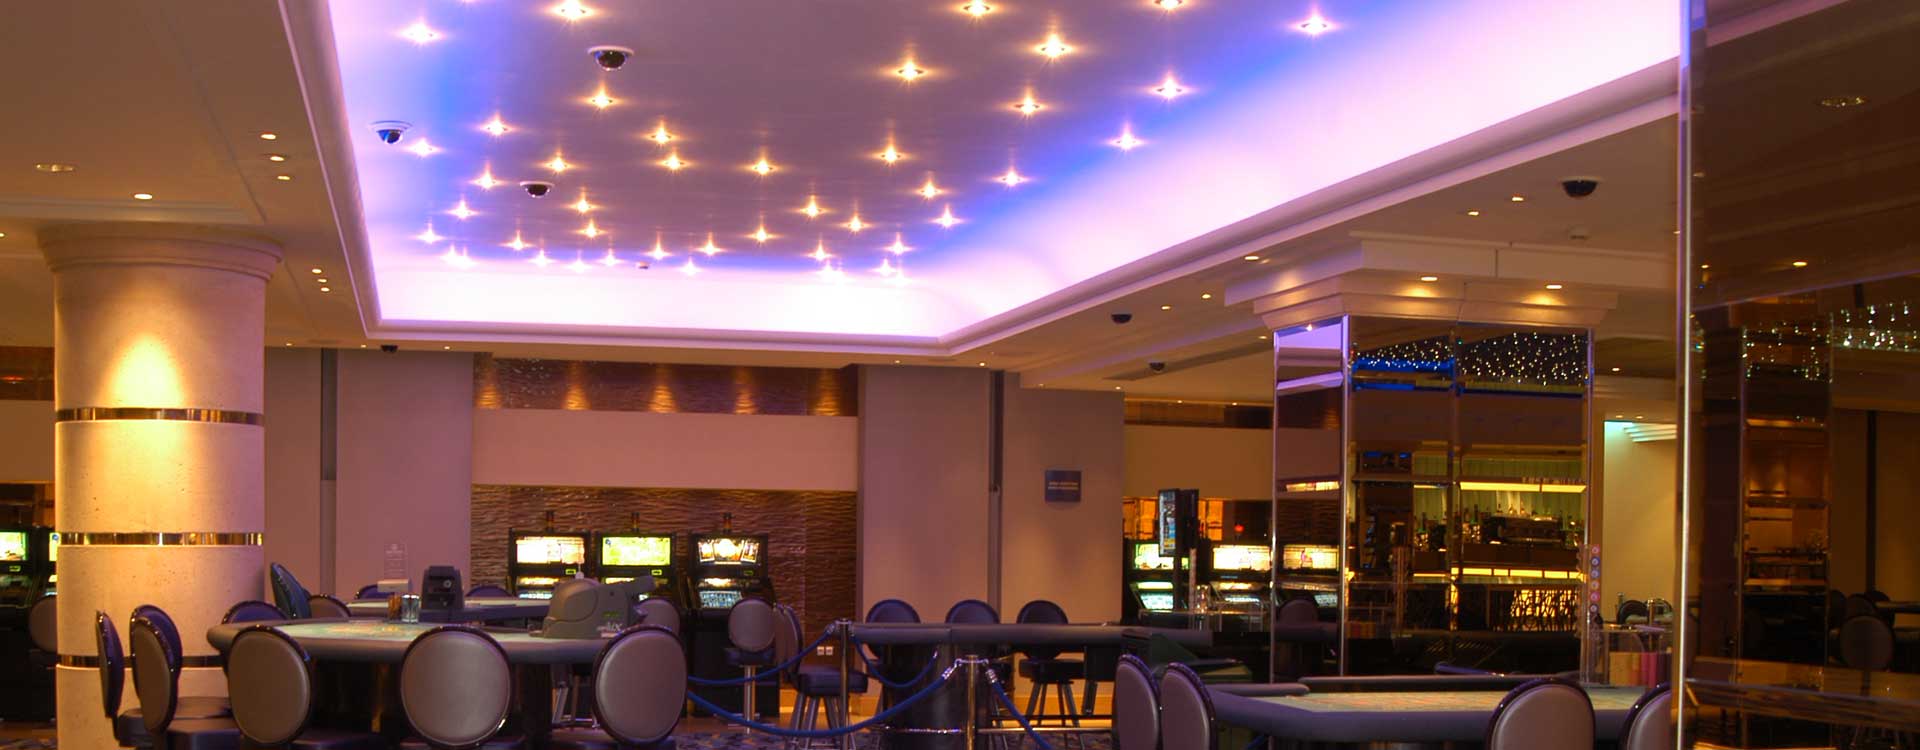 fibre optic lighting in the gran casino al jarafe